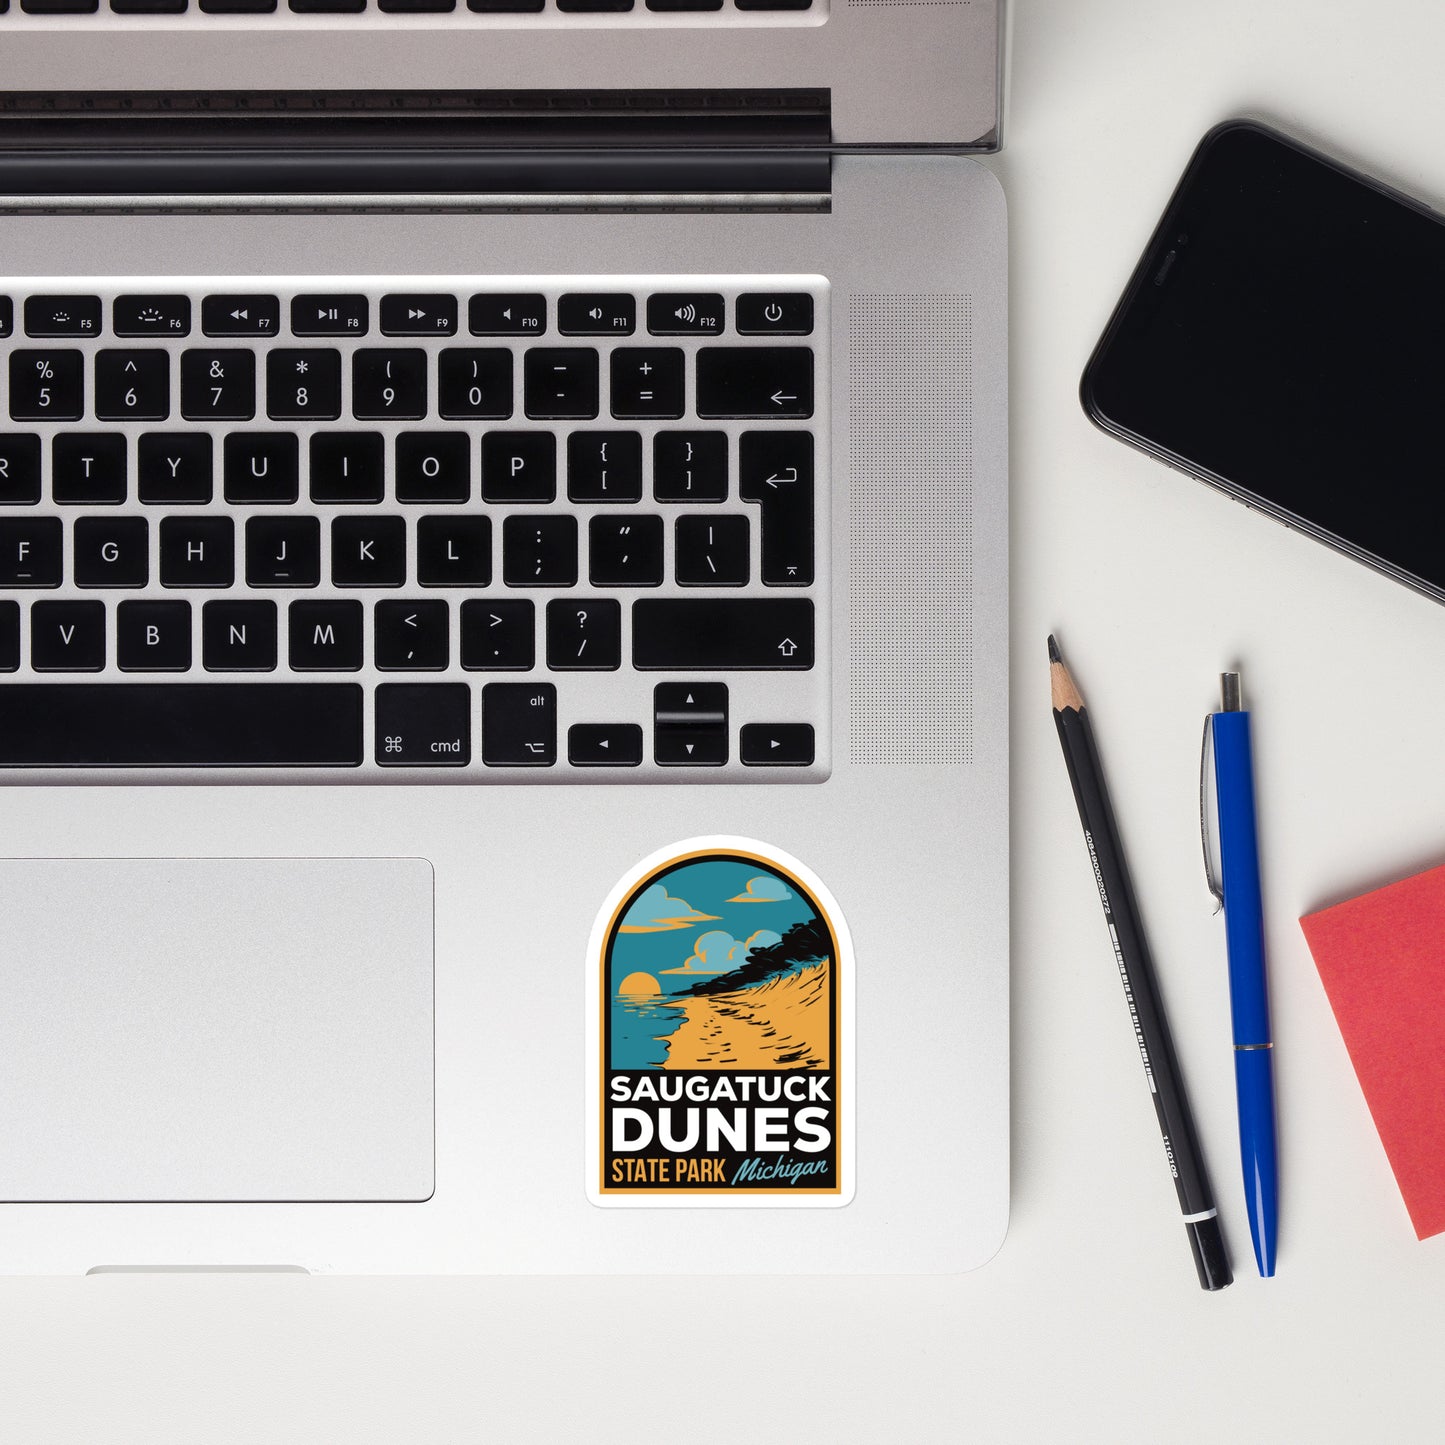 A sticker of Saugatuck Dunes State Park on a laptop